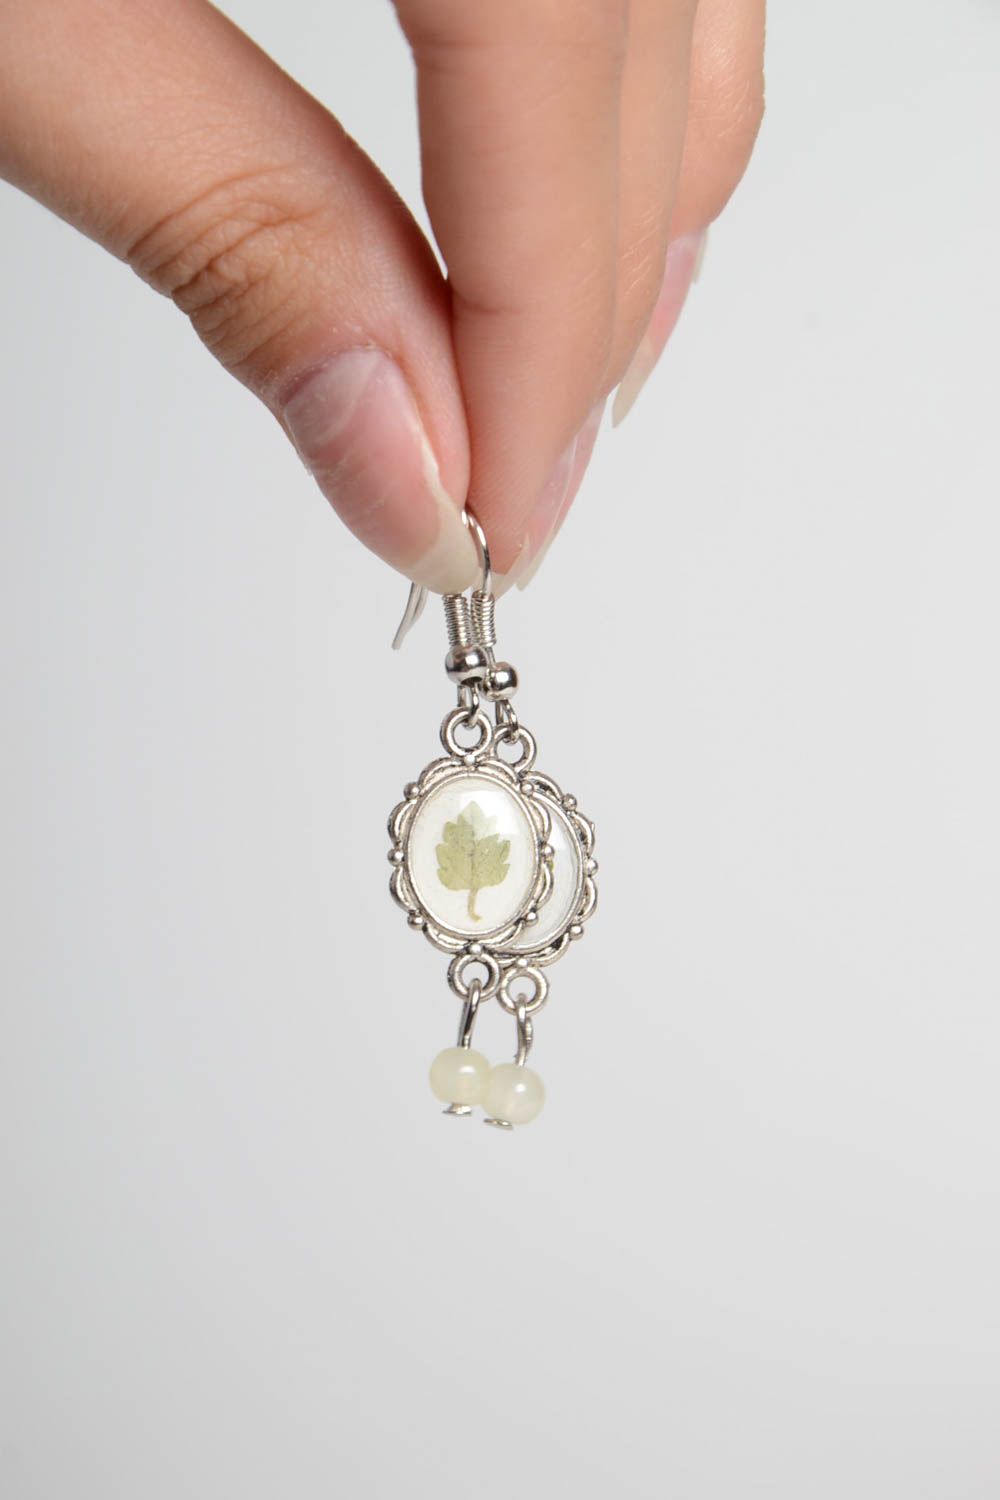 Handmade vintage jewelry unusual earrings with charms designer earrings photo 5